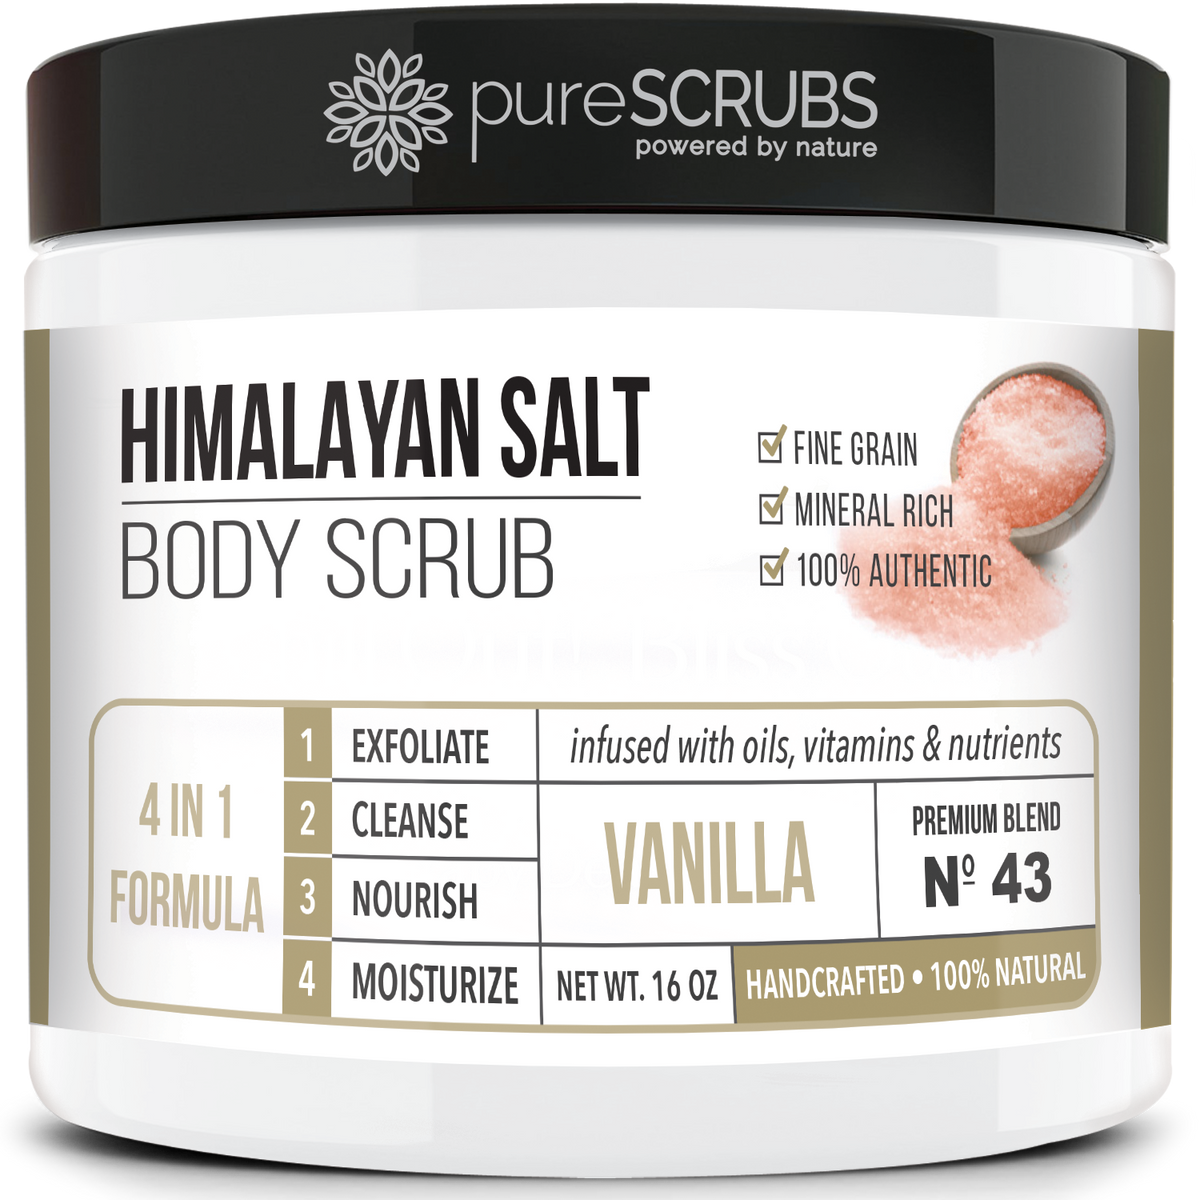 Vanilla Body Scrub / Pink Himalayan Salt / Premium Blend #43